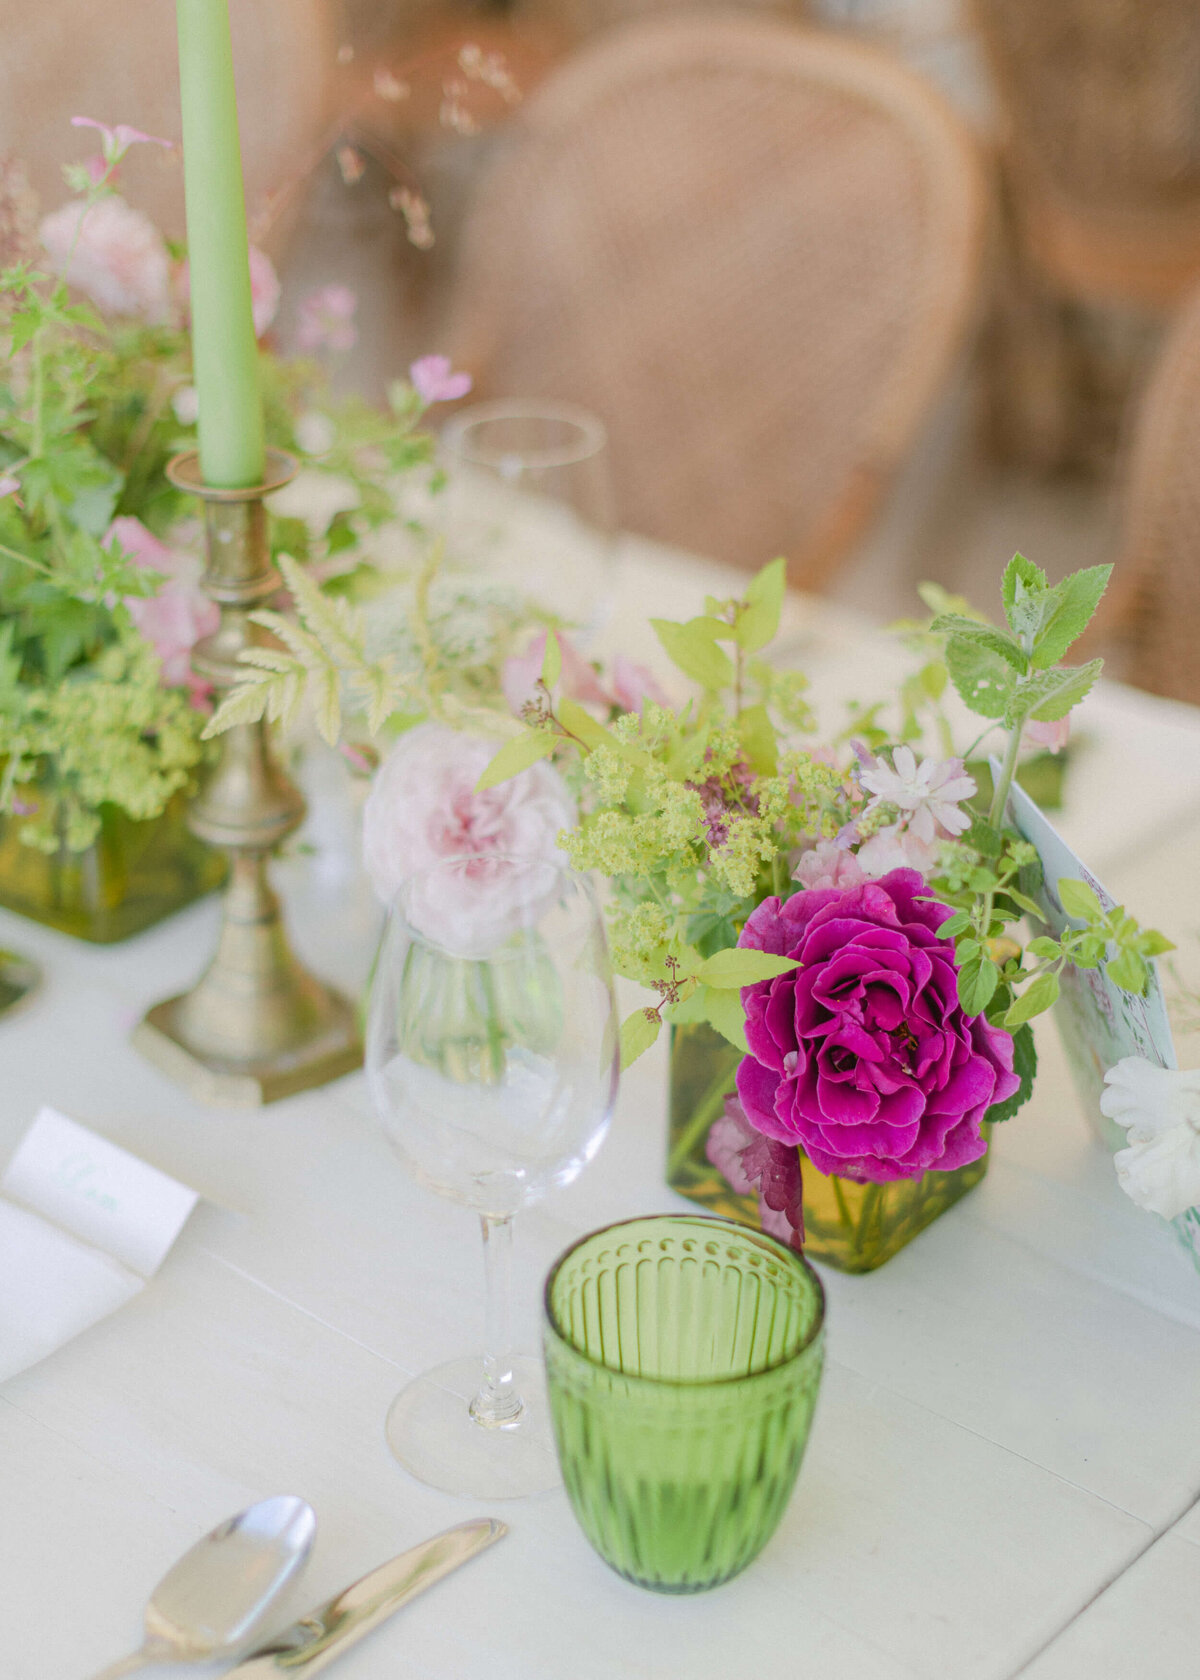 chloe-winstanley-weddings-tablesetting-green-blush-pink